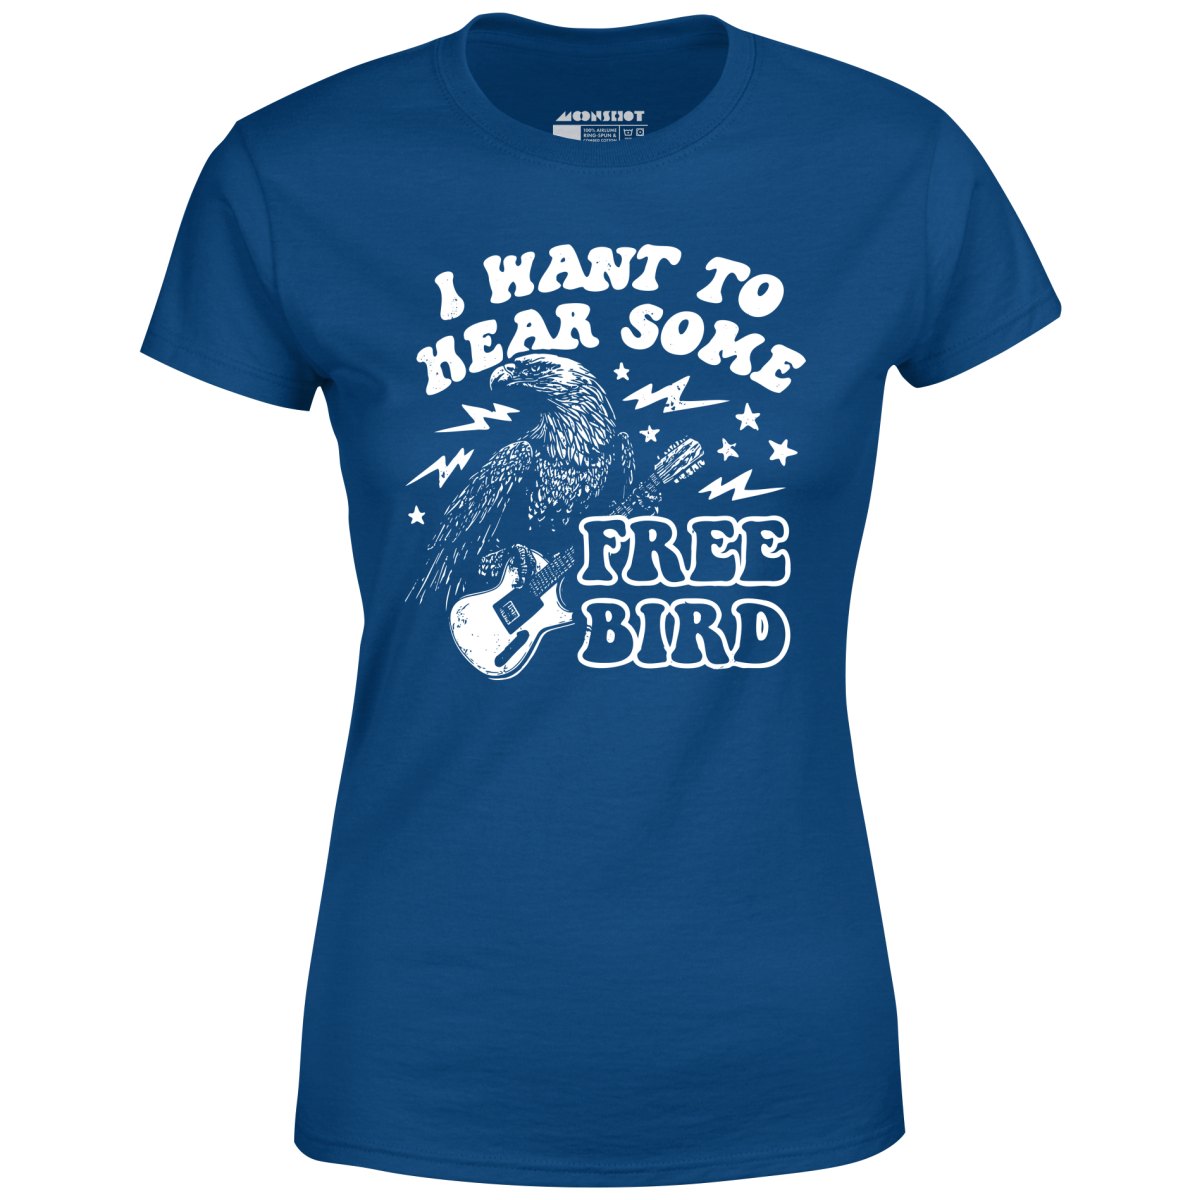 I Want to Hear Some Free Bird - Women's T-Shirt